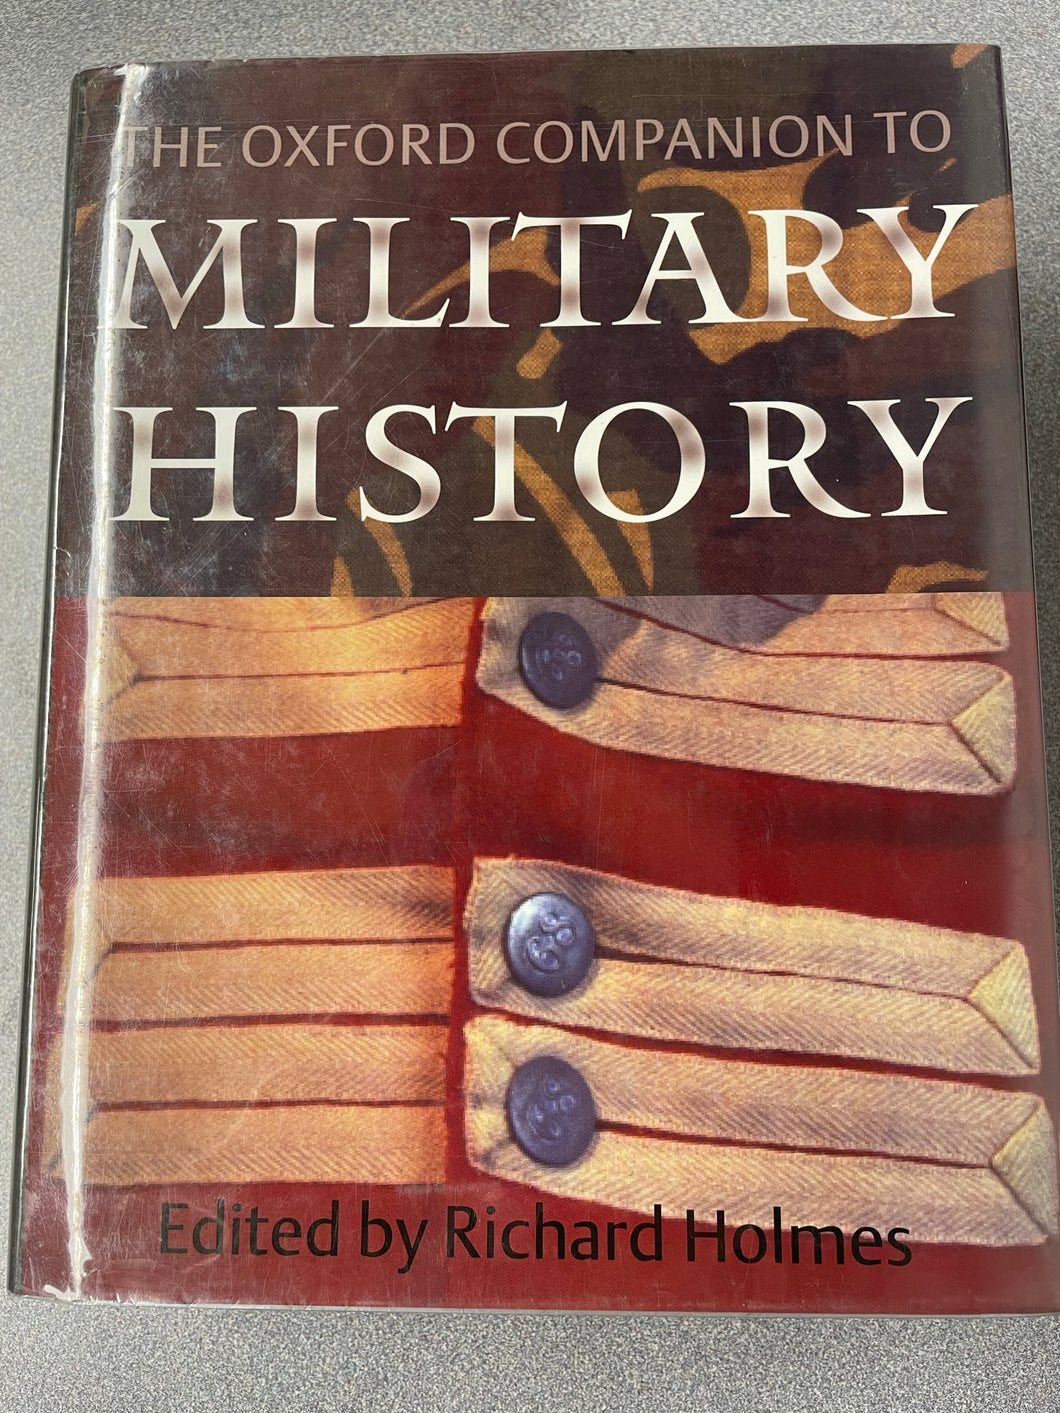 The Oxford Companion to Military History, Holmes, Richard, ed. [2001] ML 9/23